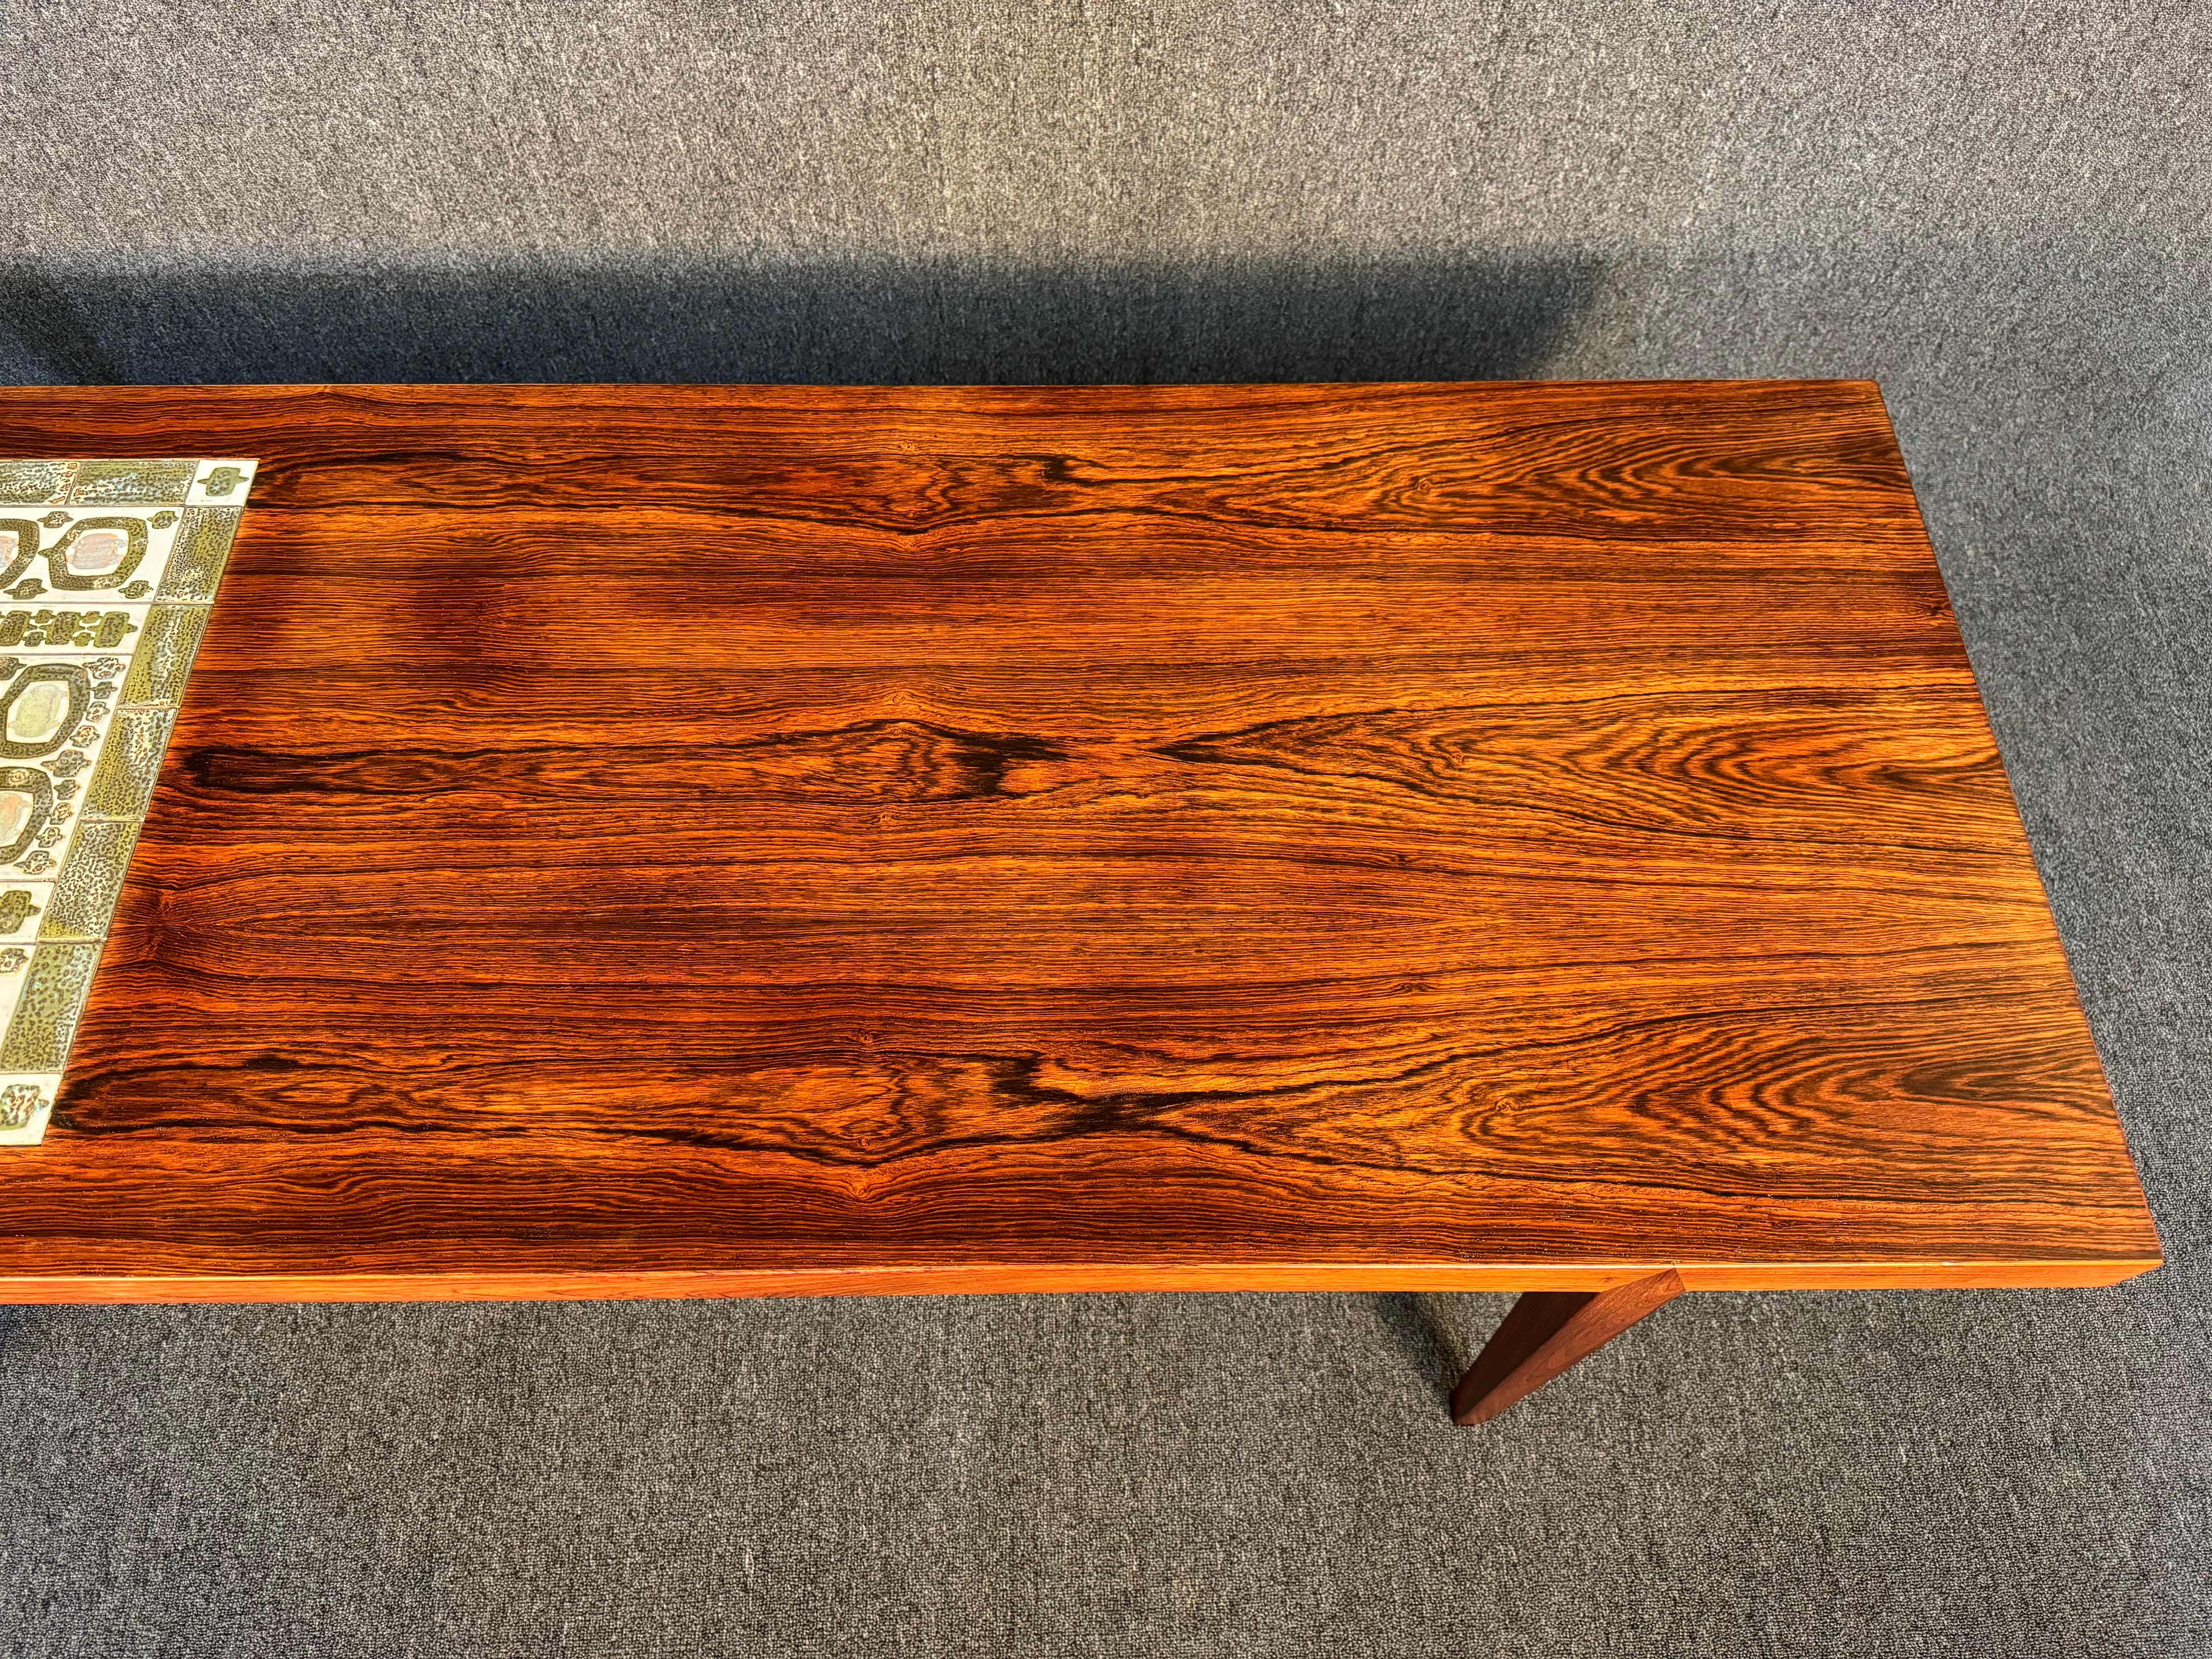 Woodwork Vintage Danish MidCentury Modern Rosewood Coffee Table & Tiles by Severin Hansen For Sale